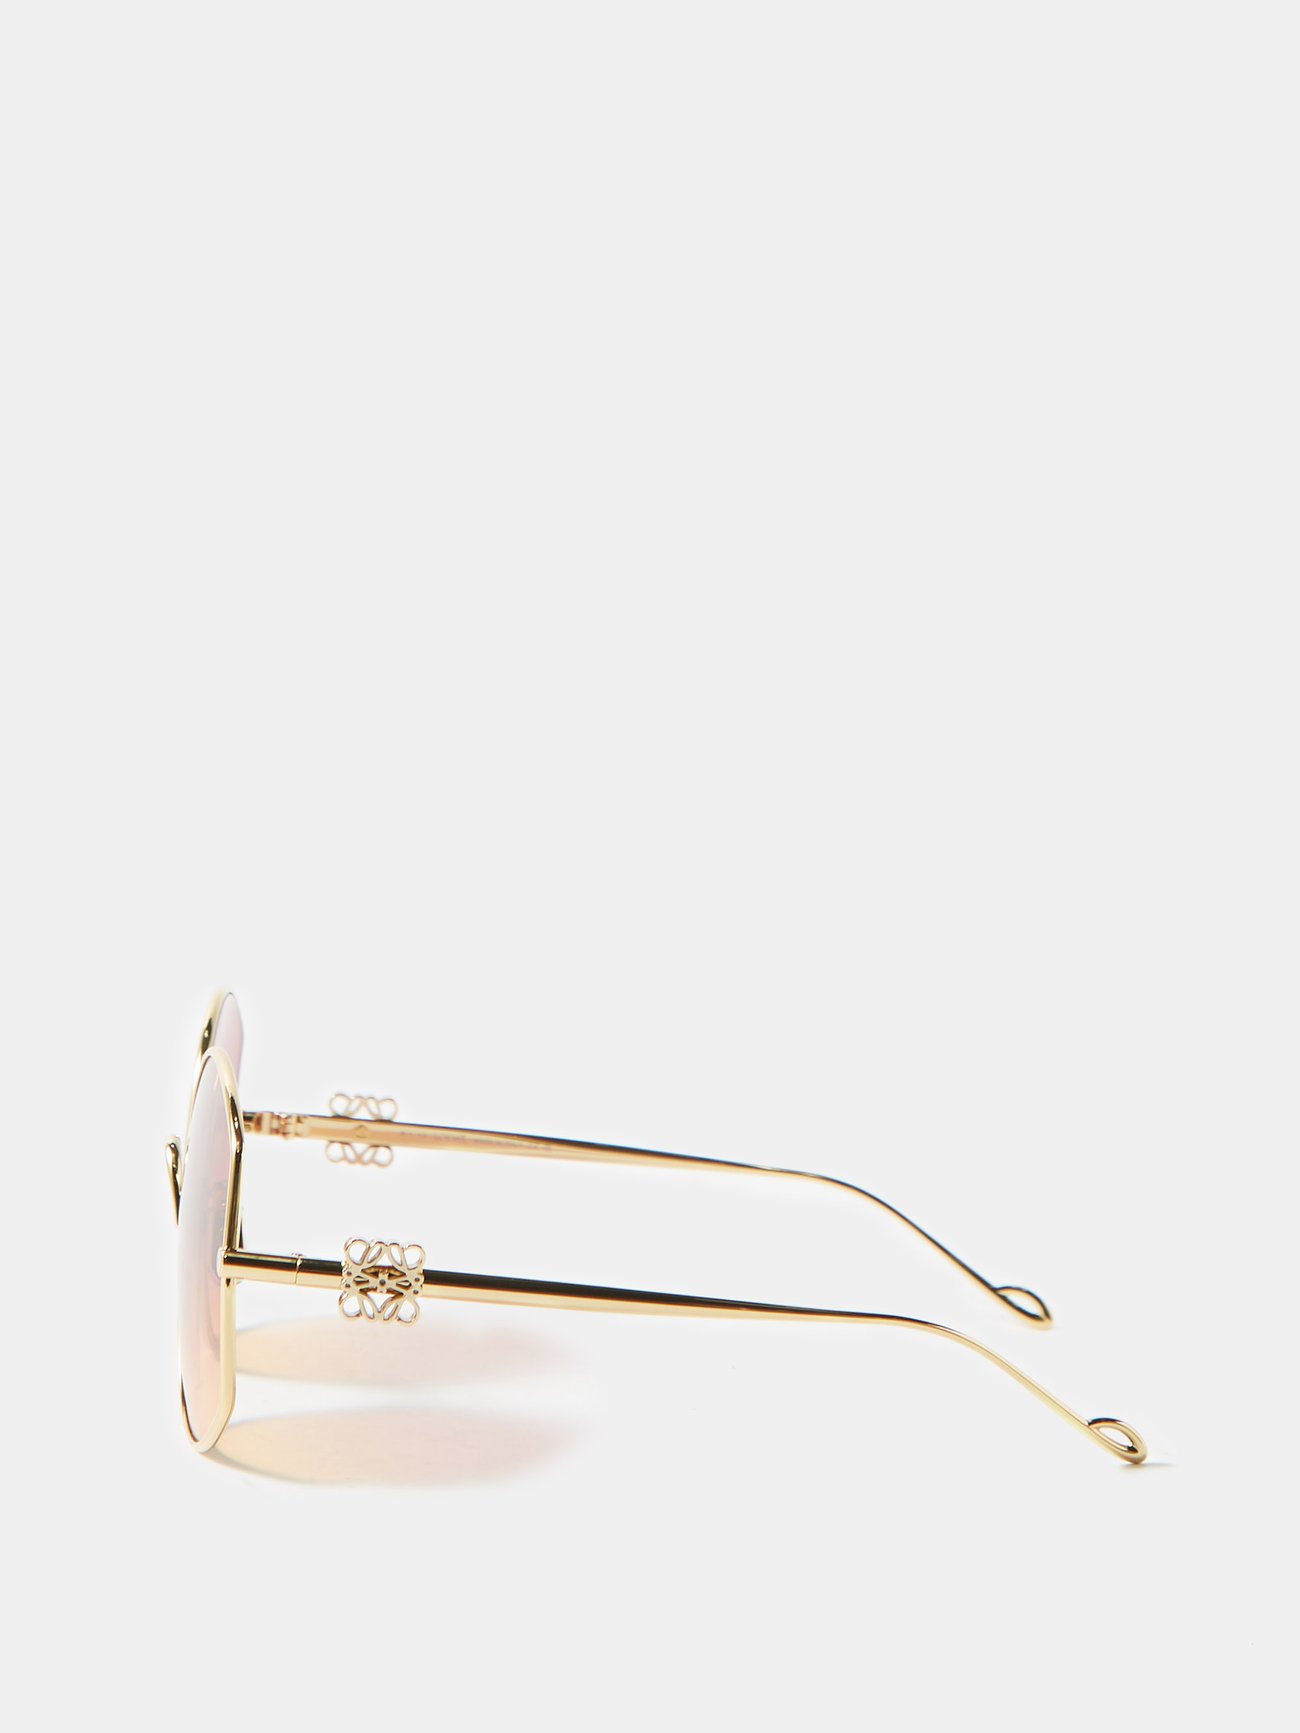 Loewe Round Gradient Sunglasses - Brown Sunglasses, Accessories - LOW50750